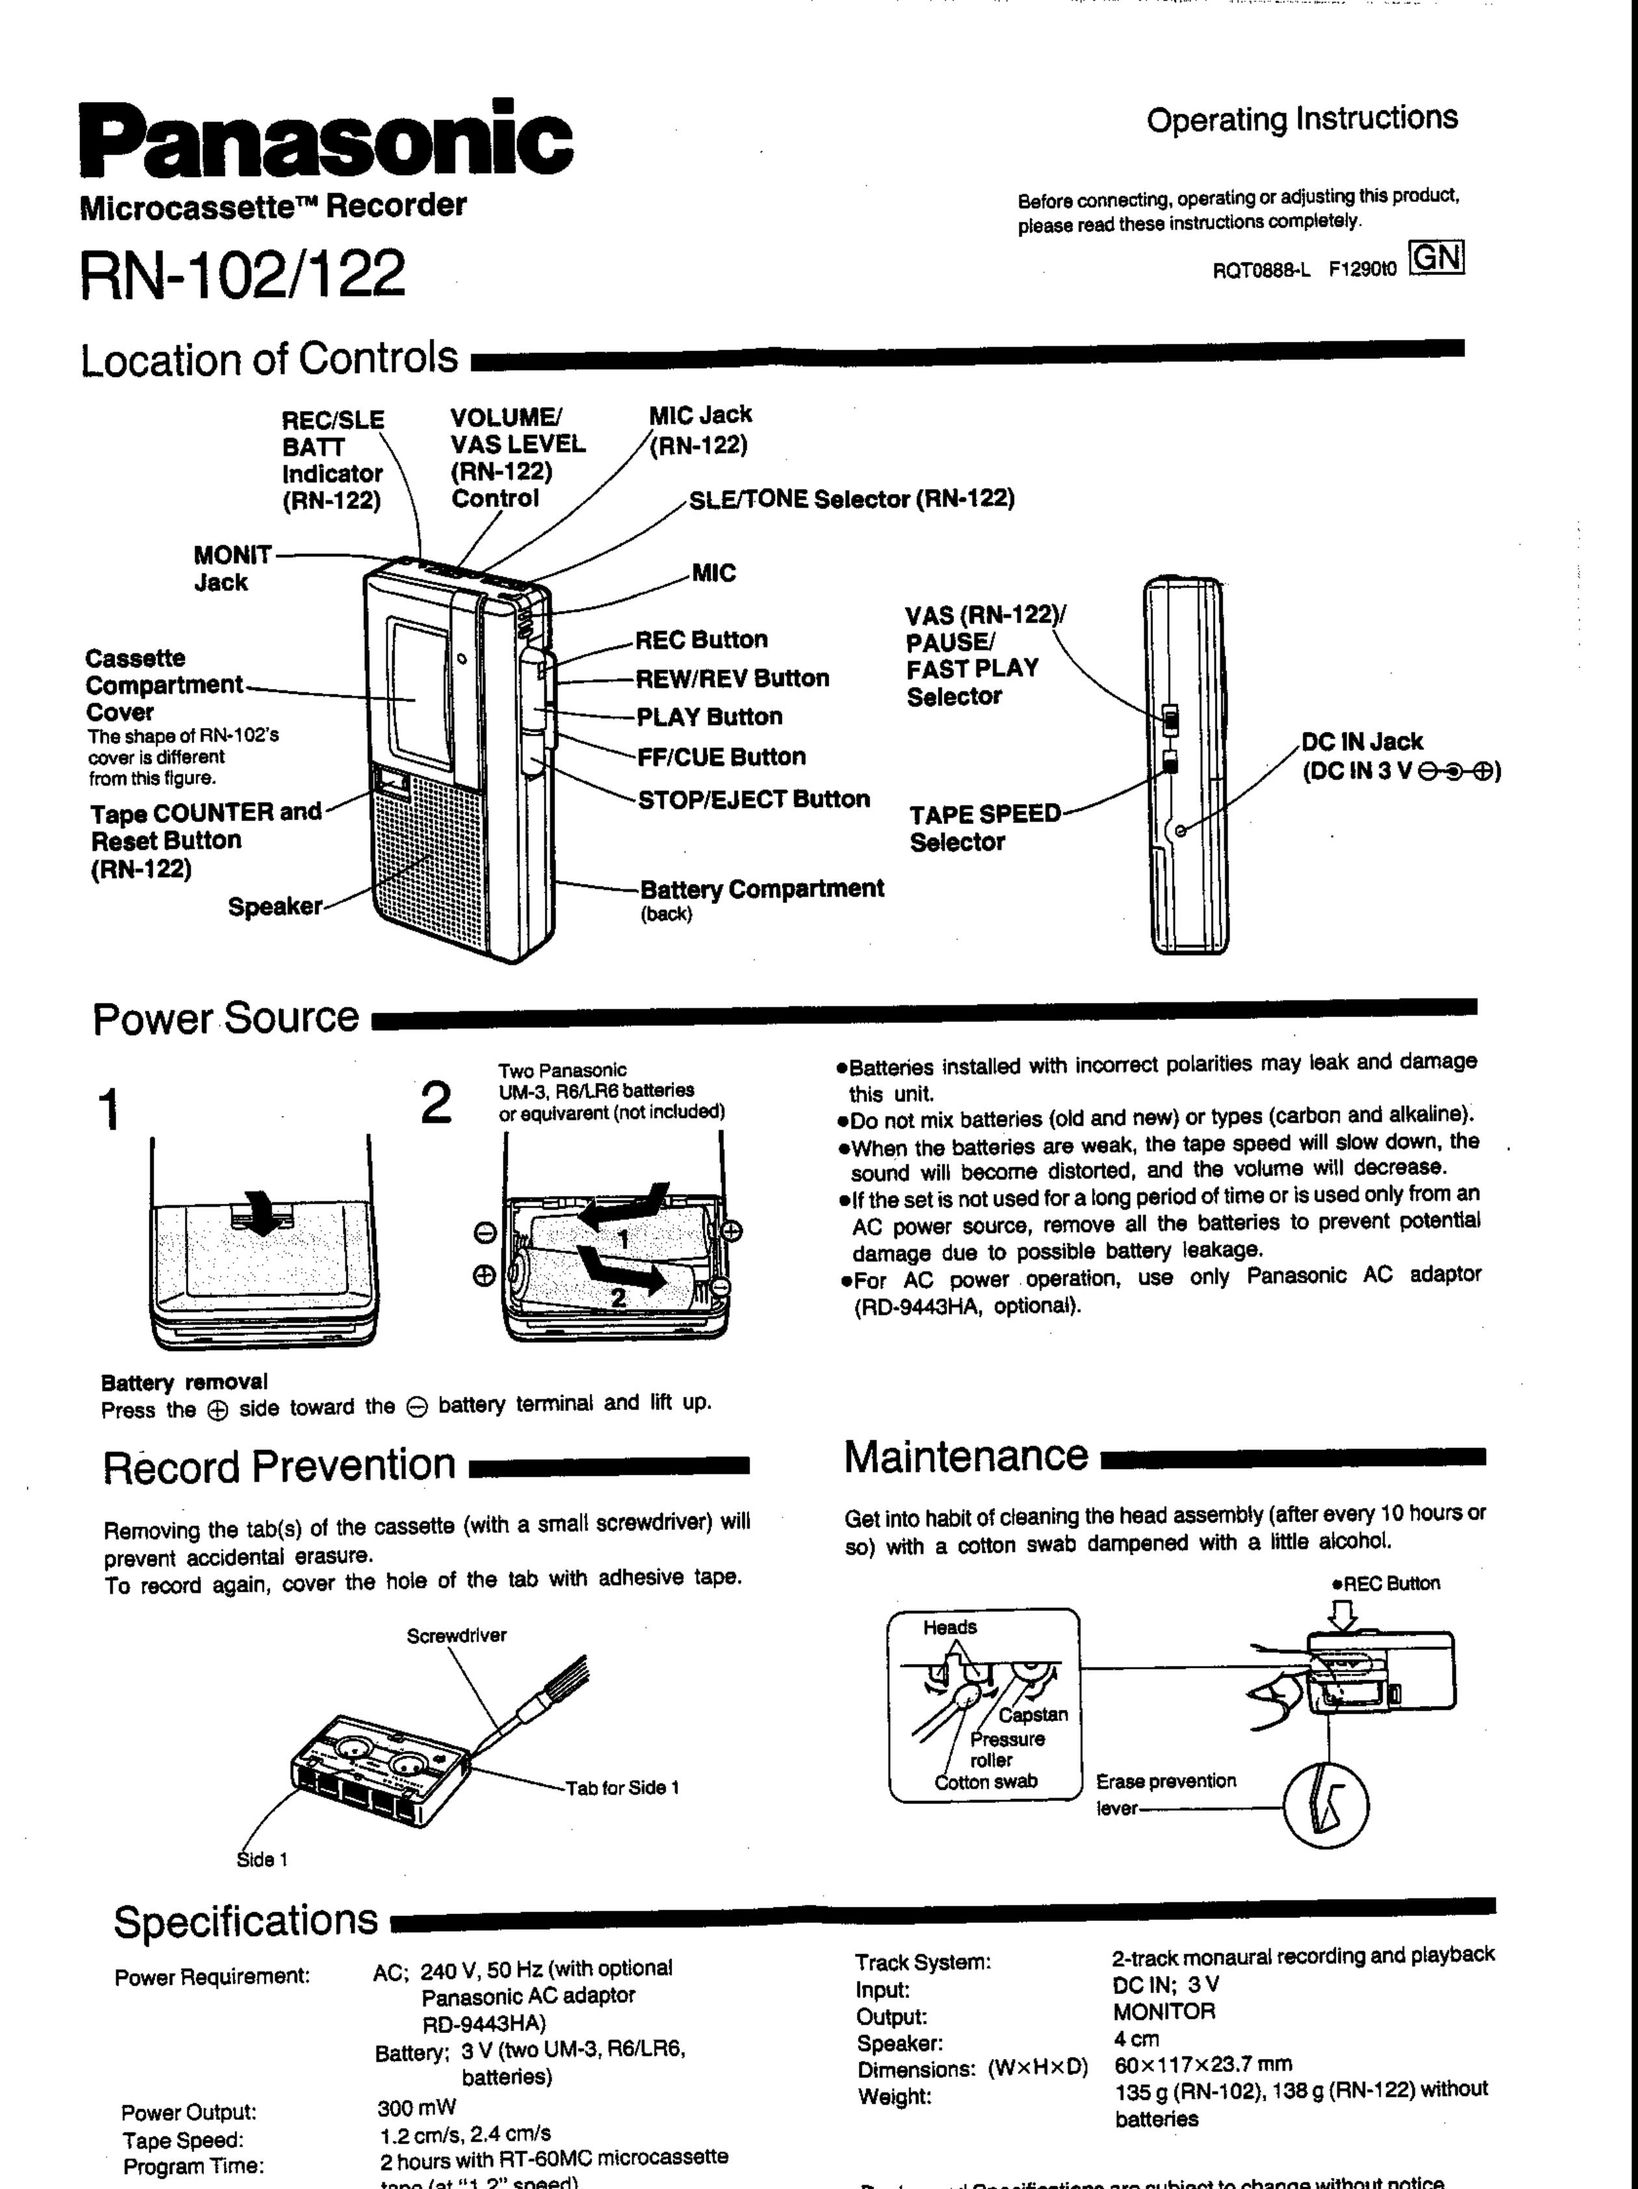 Panasonic RN-102 Microcassette Recorder User Manual